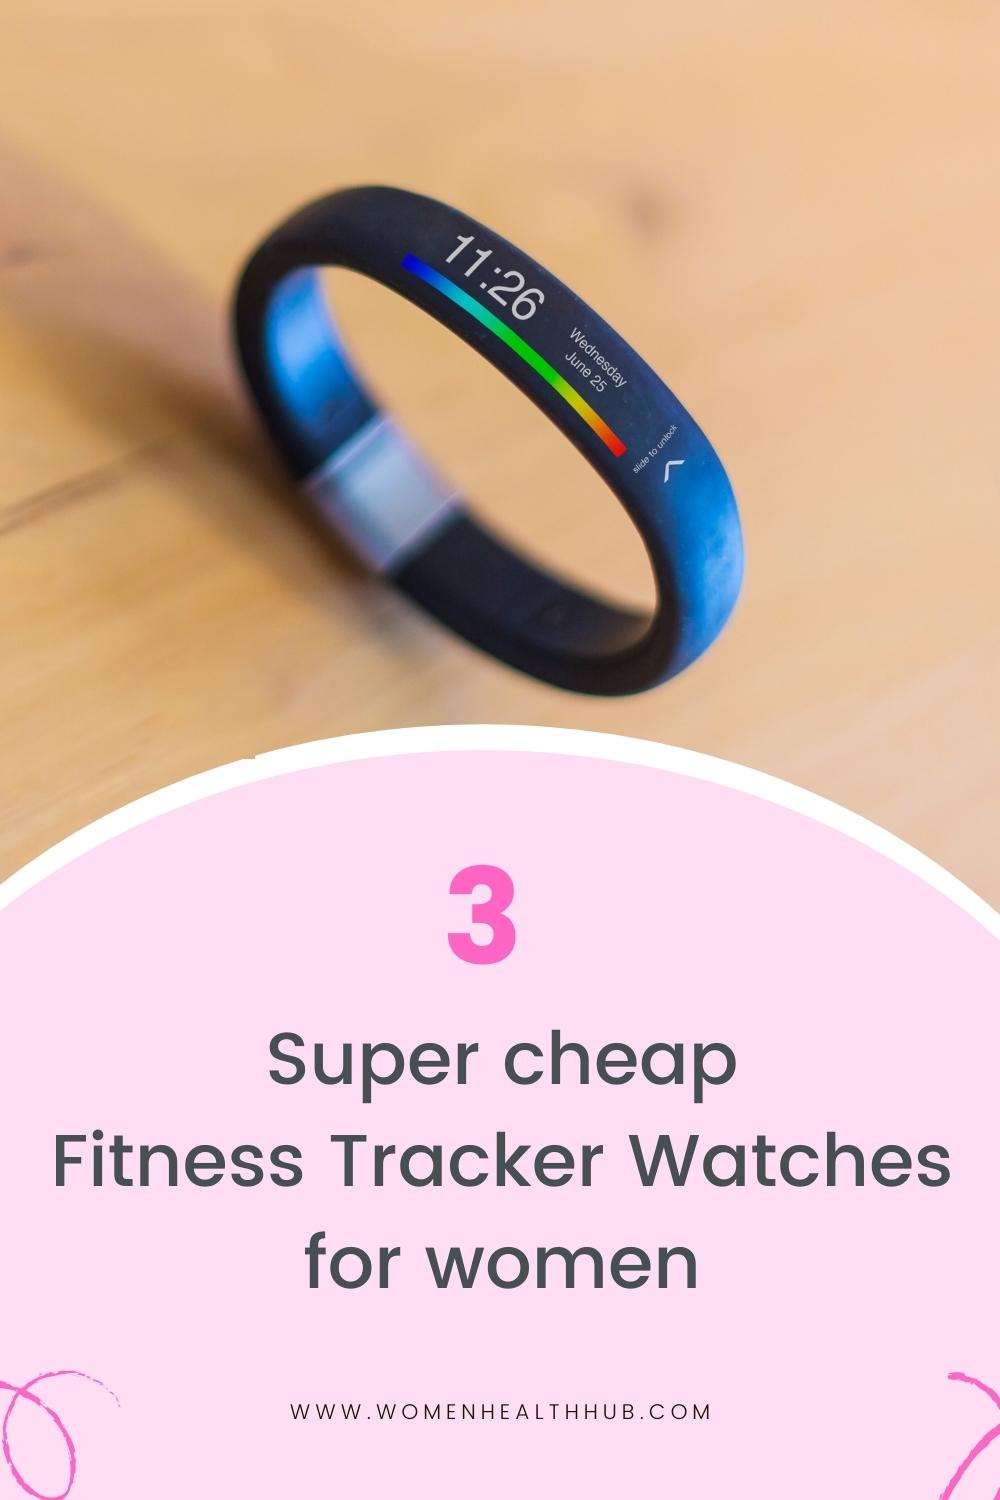 Must have women's fitness smartwatch under $50